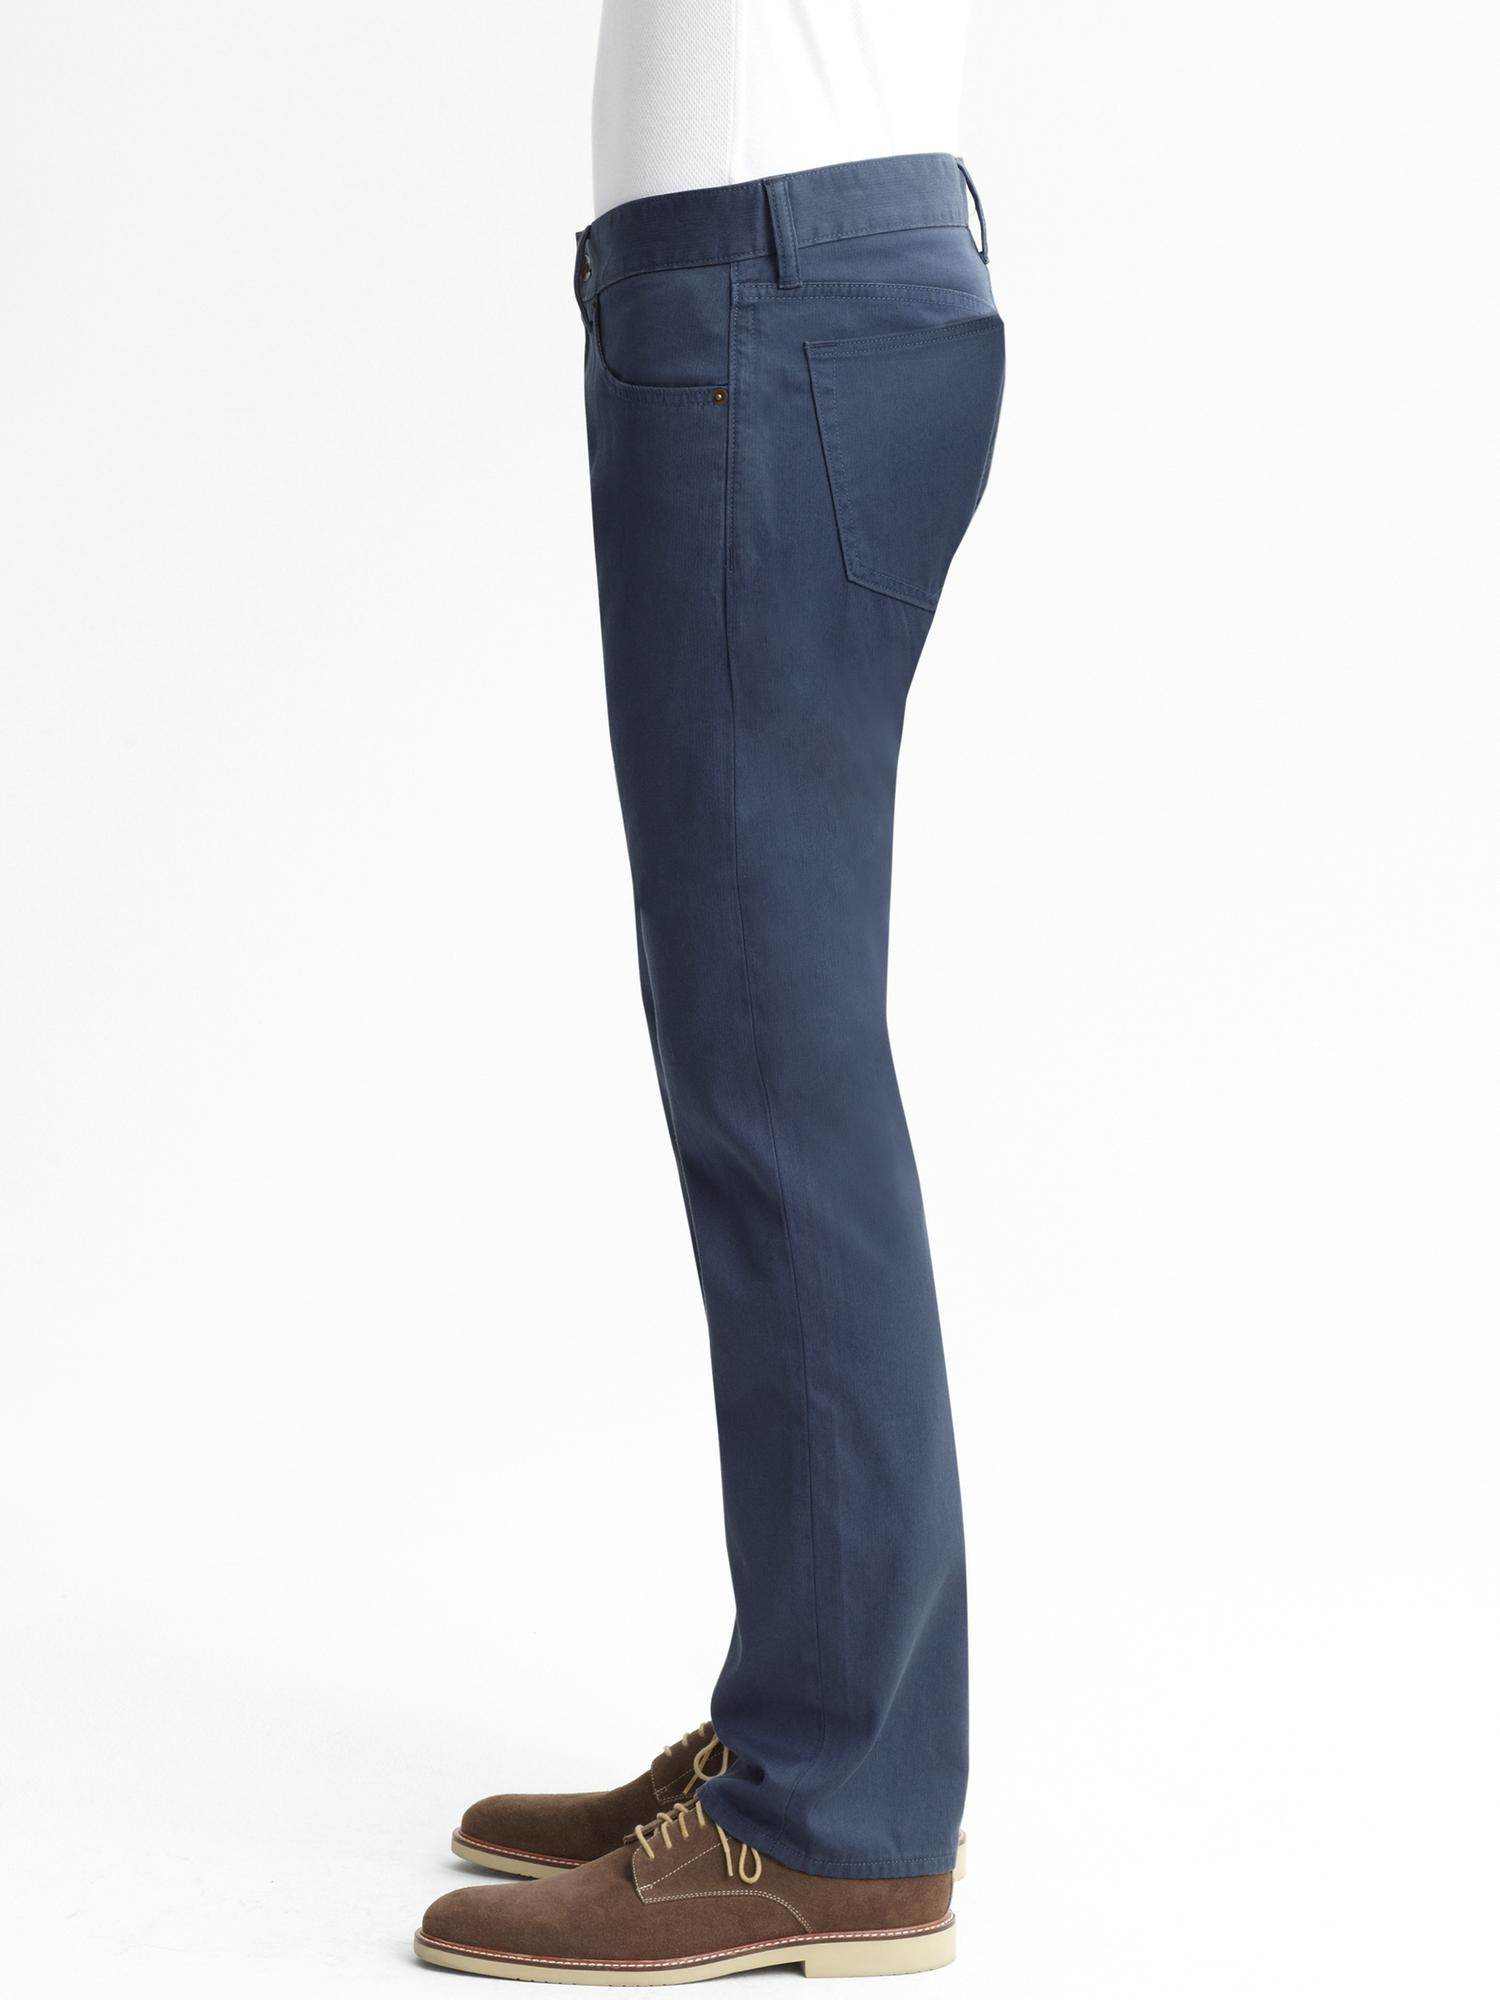 Vintage straight five-pocket pant